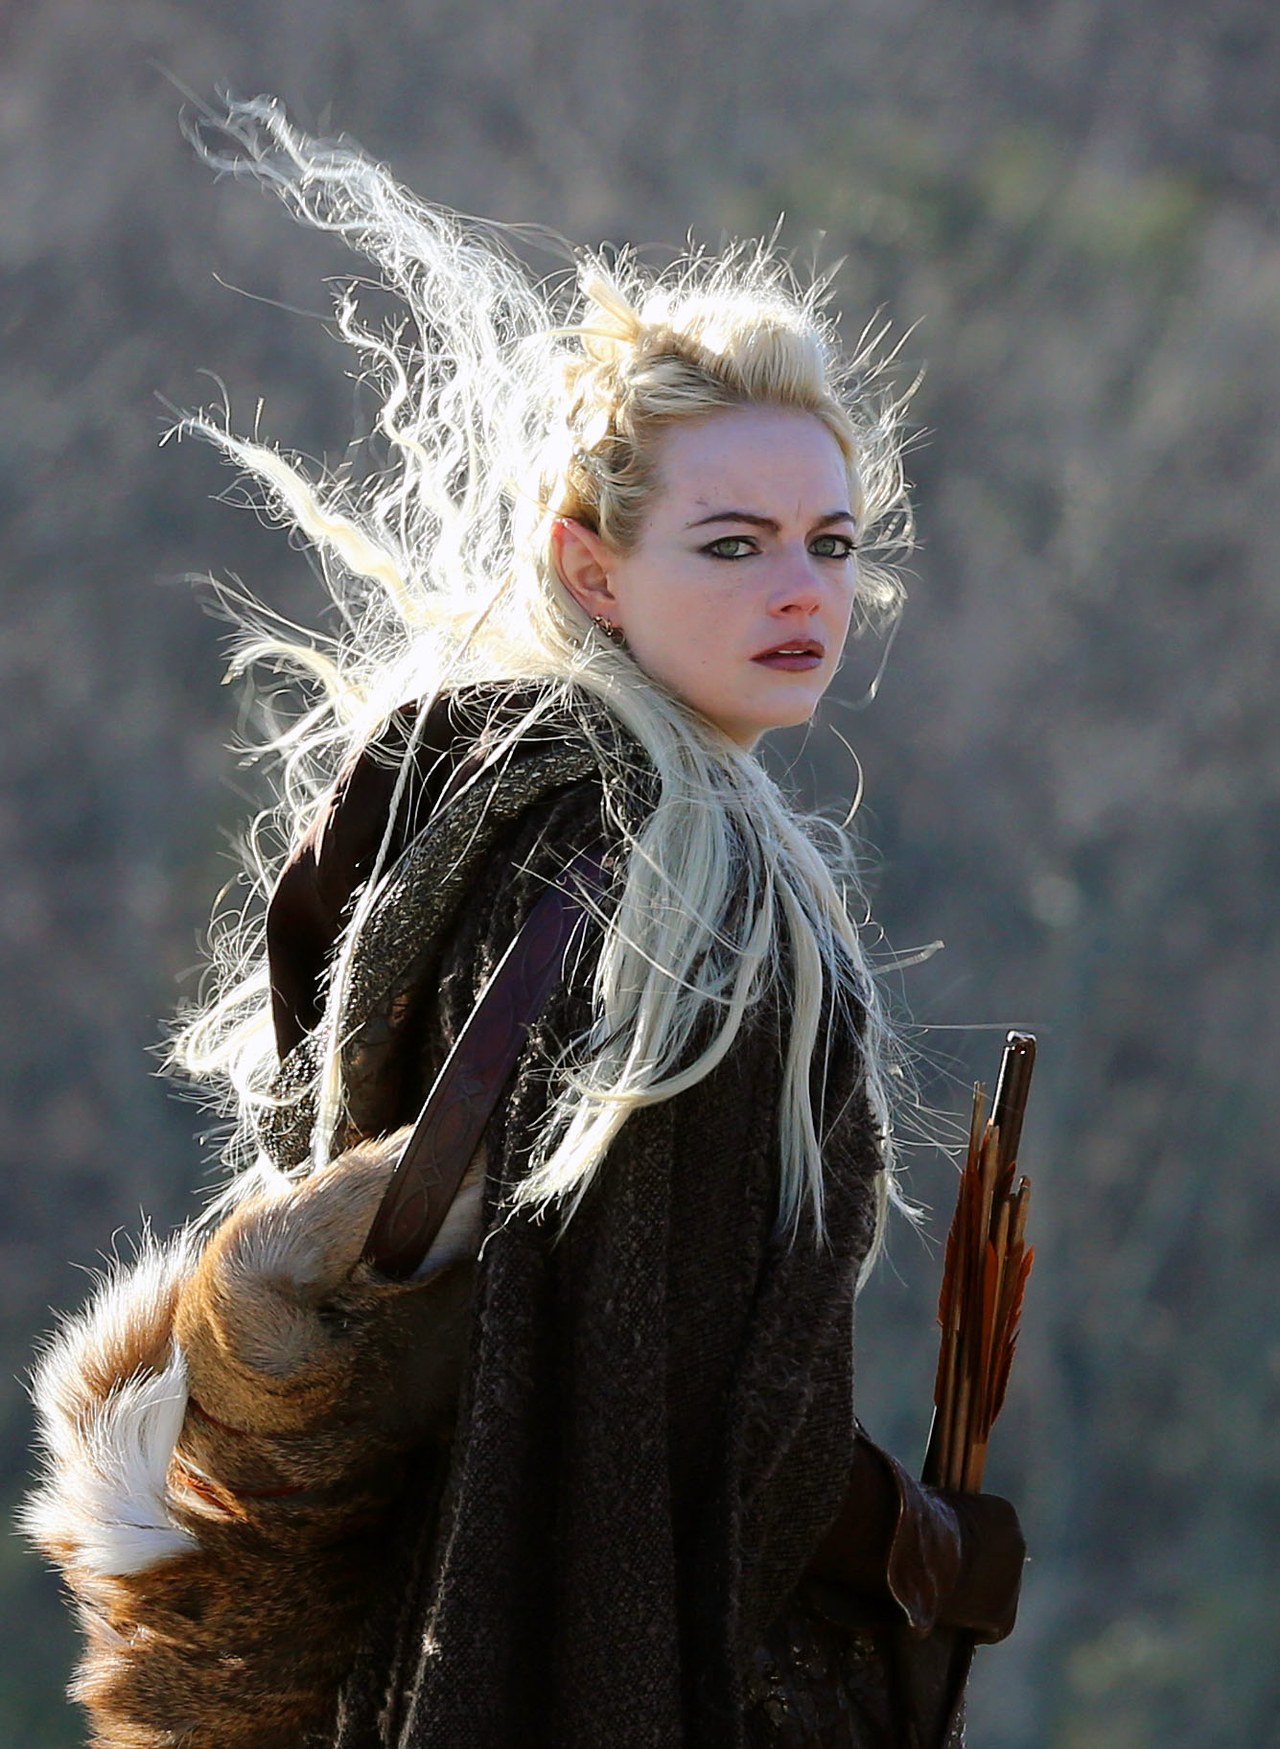 Emma Stone Has Long Blonde Hair In Maniac Halo News